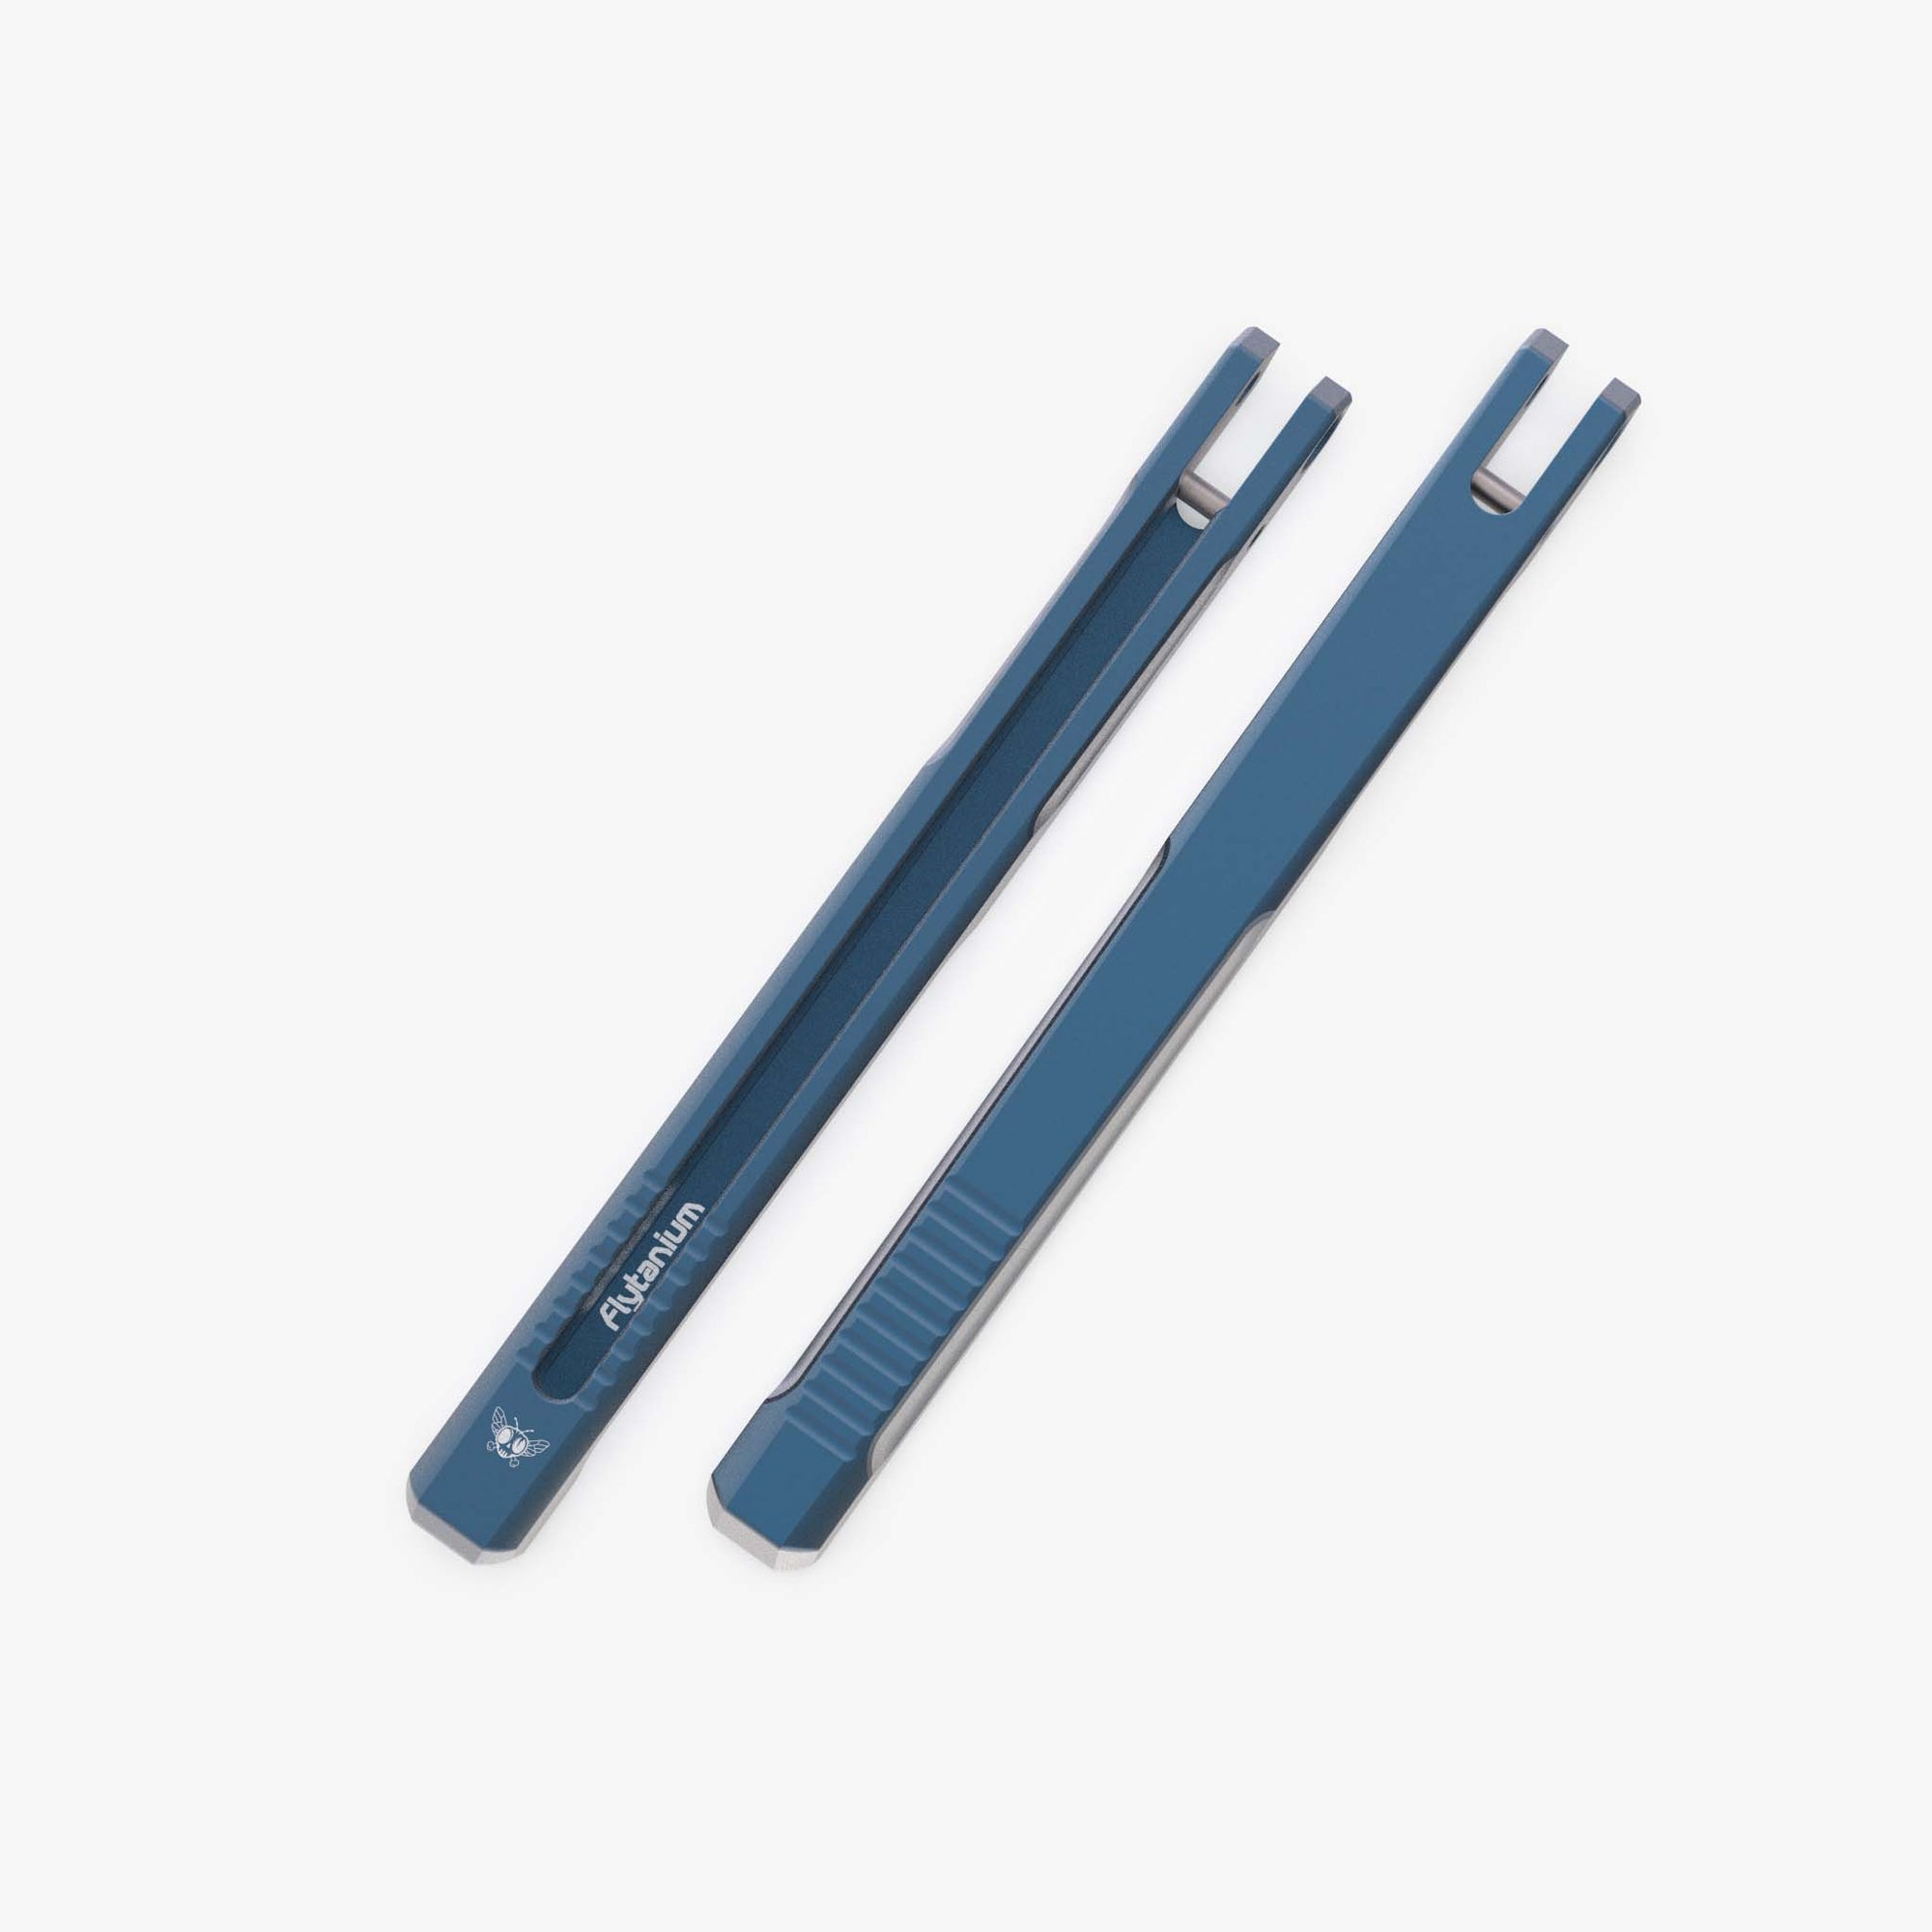 Aluminum v1.5 Handles for the Kershaw Lucha Balisong-Slate Blue